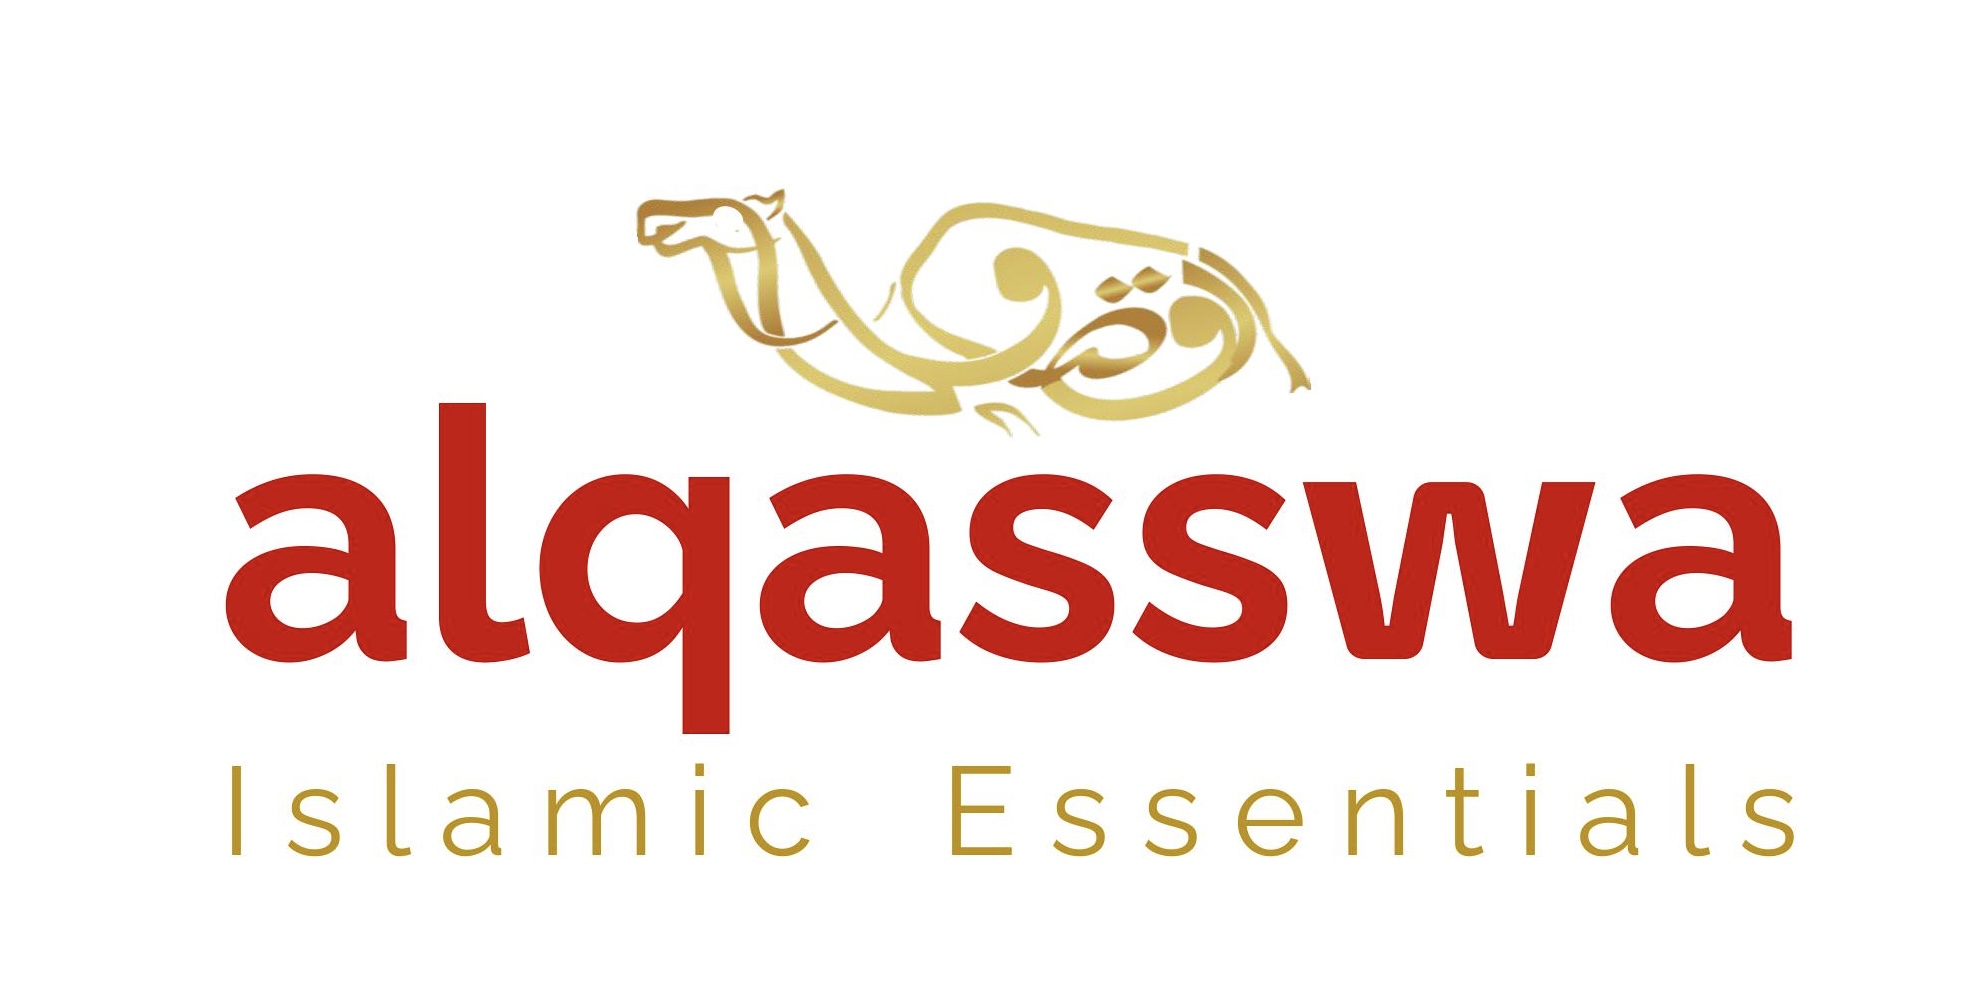 ALQASSWA – Islamic Essentials